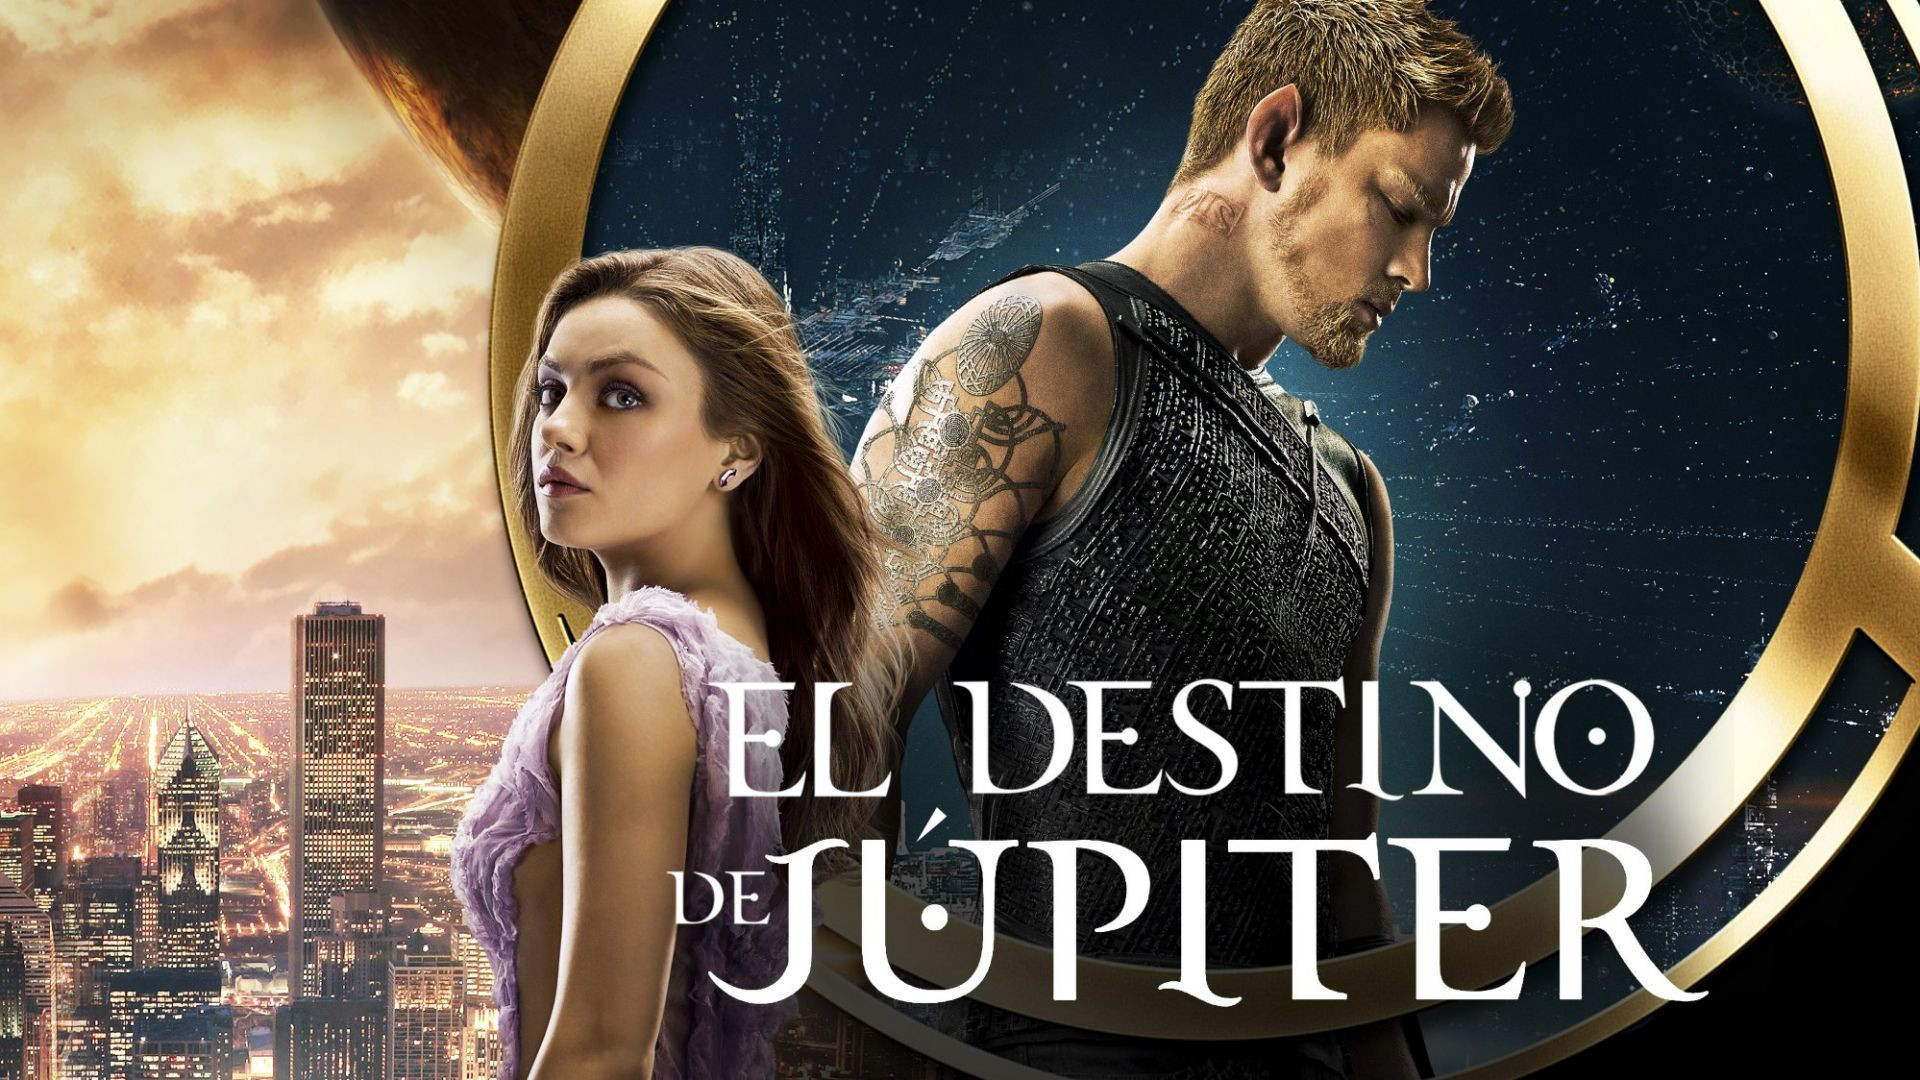 El Destino de Jupiter (2015) cas.